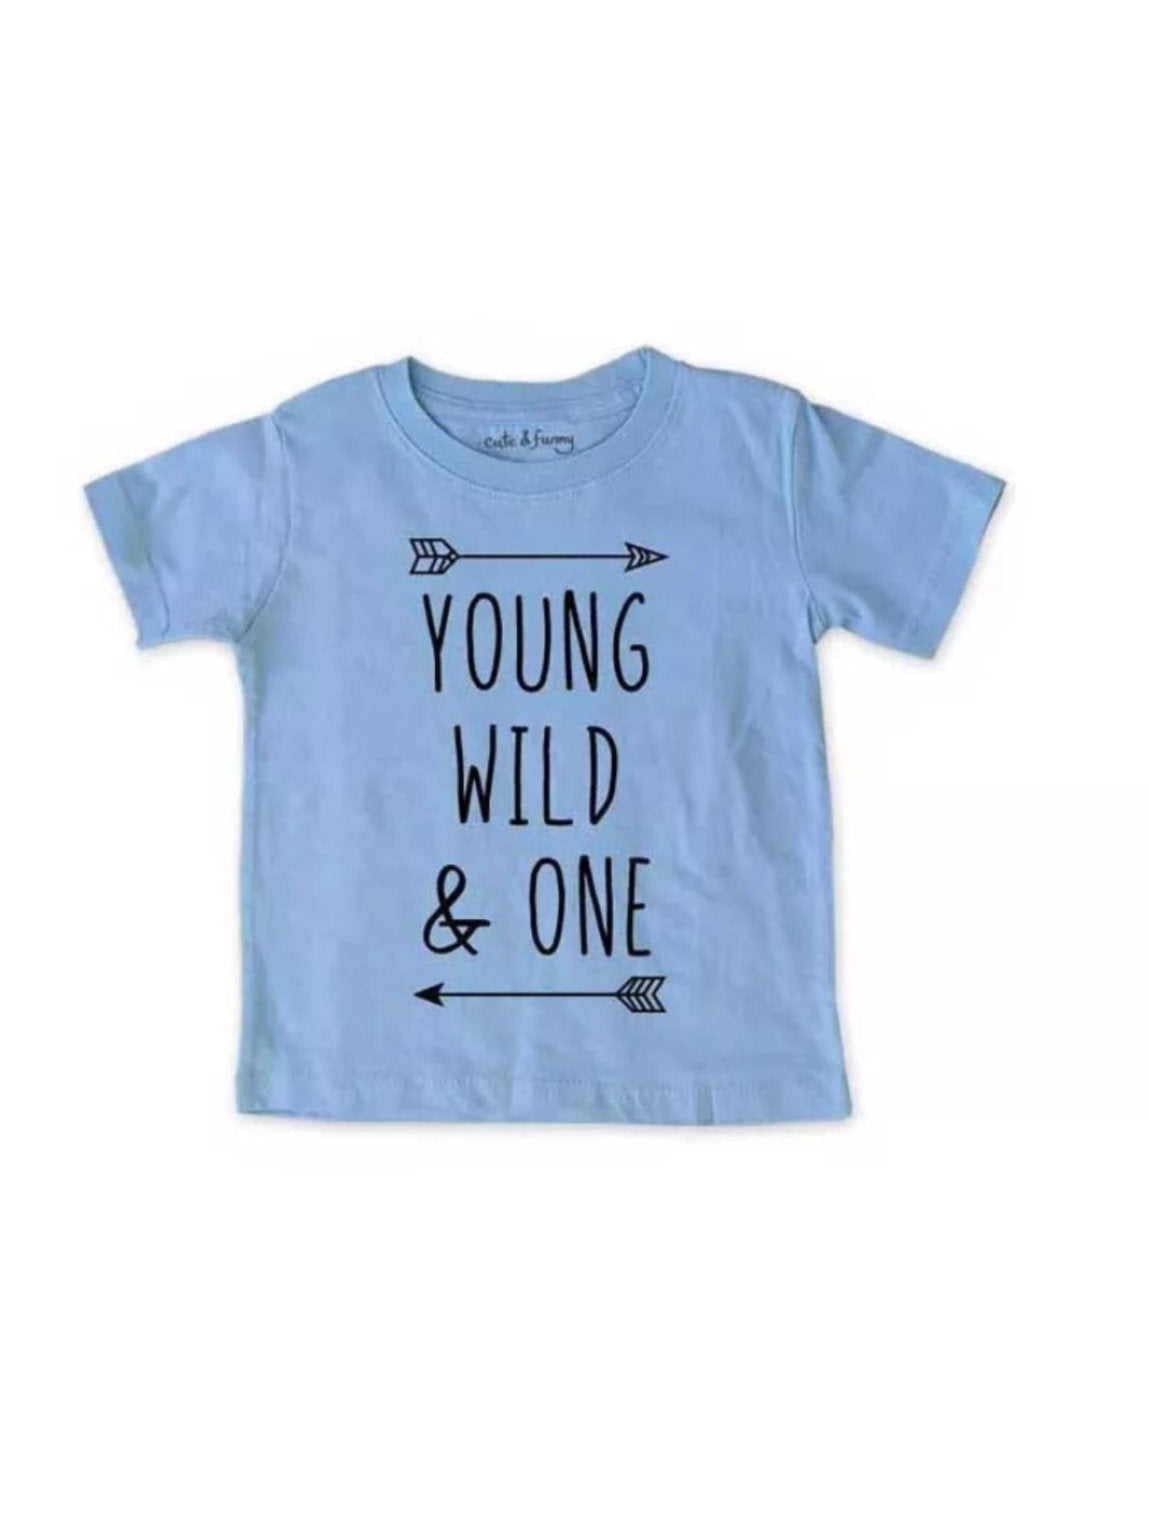 Young wild and one, 1st birthday shirt, birthday shirt| cute kids birthday shirt| first birthday shirt| cake smash shirt| birthday party